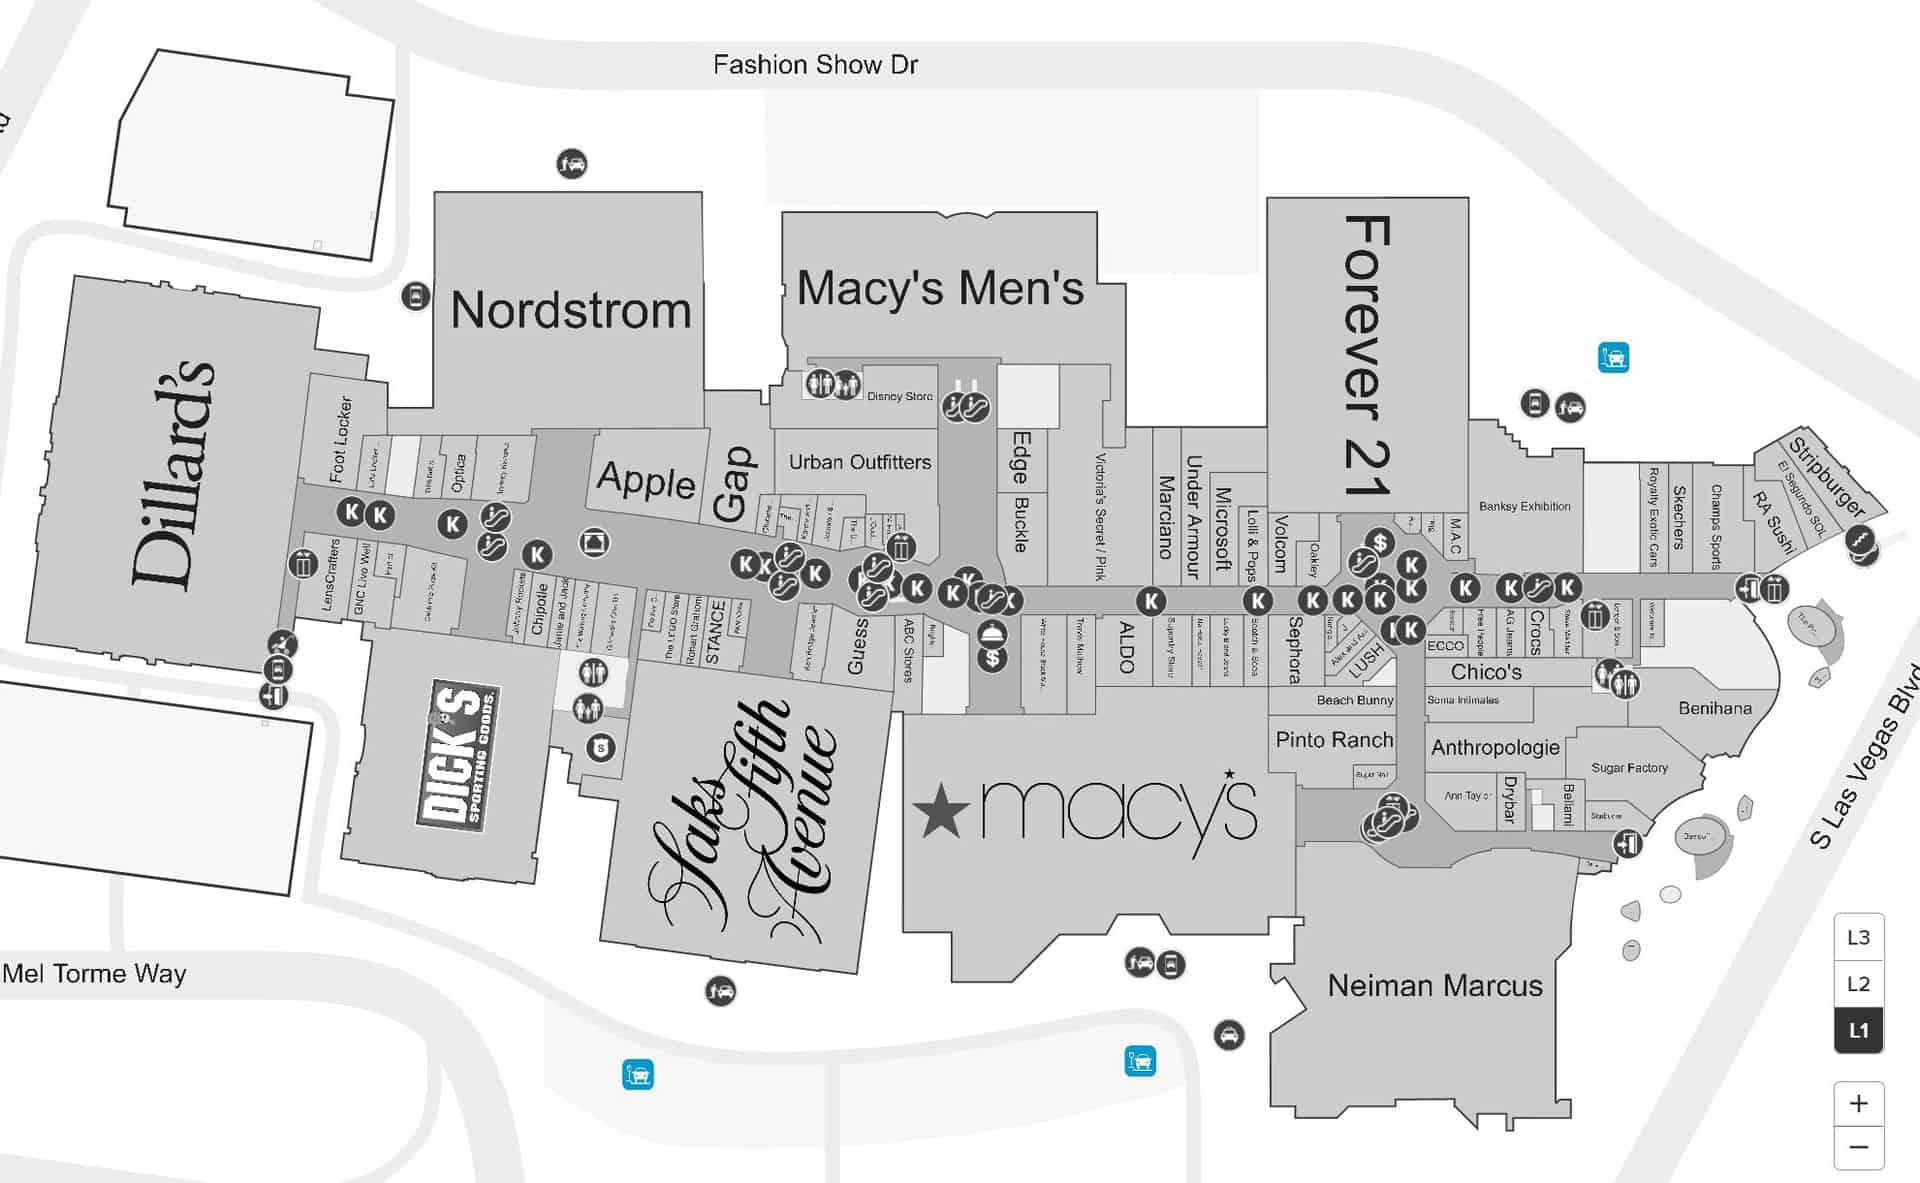 Fashion Show Mall - Stores, Restaurants, Hours, Parking, Map, Las Vegas